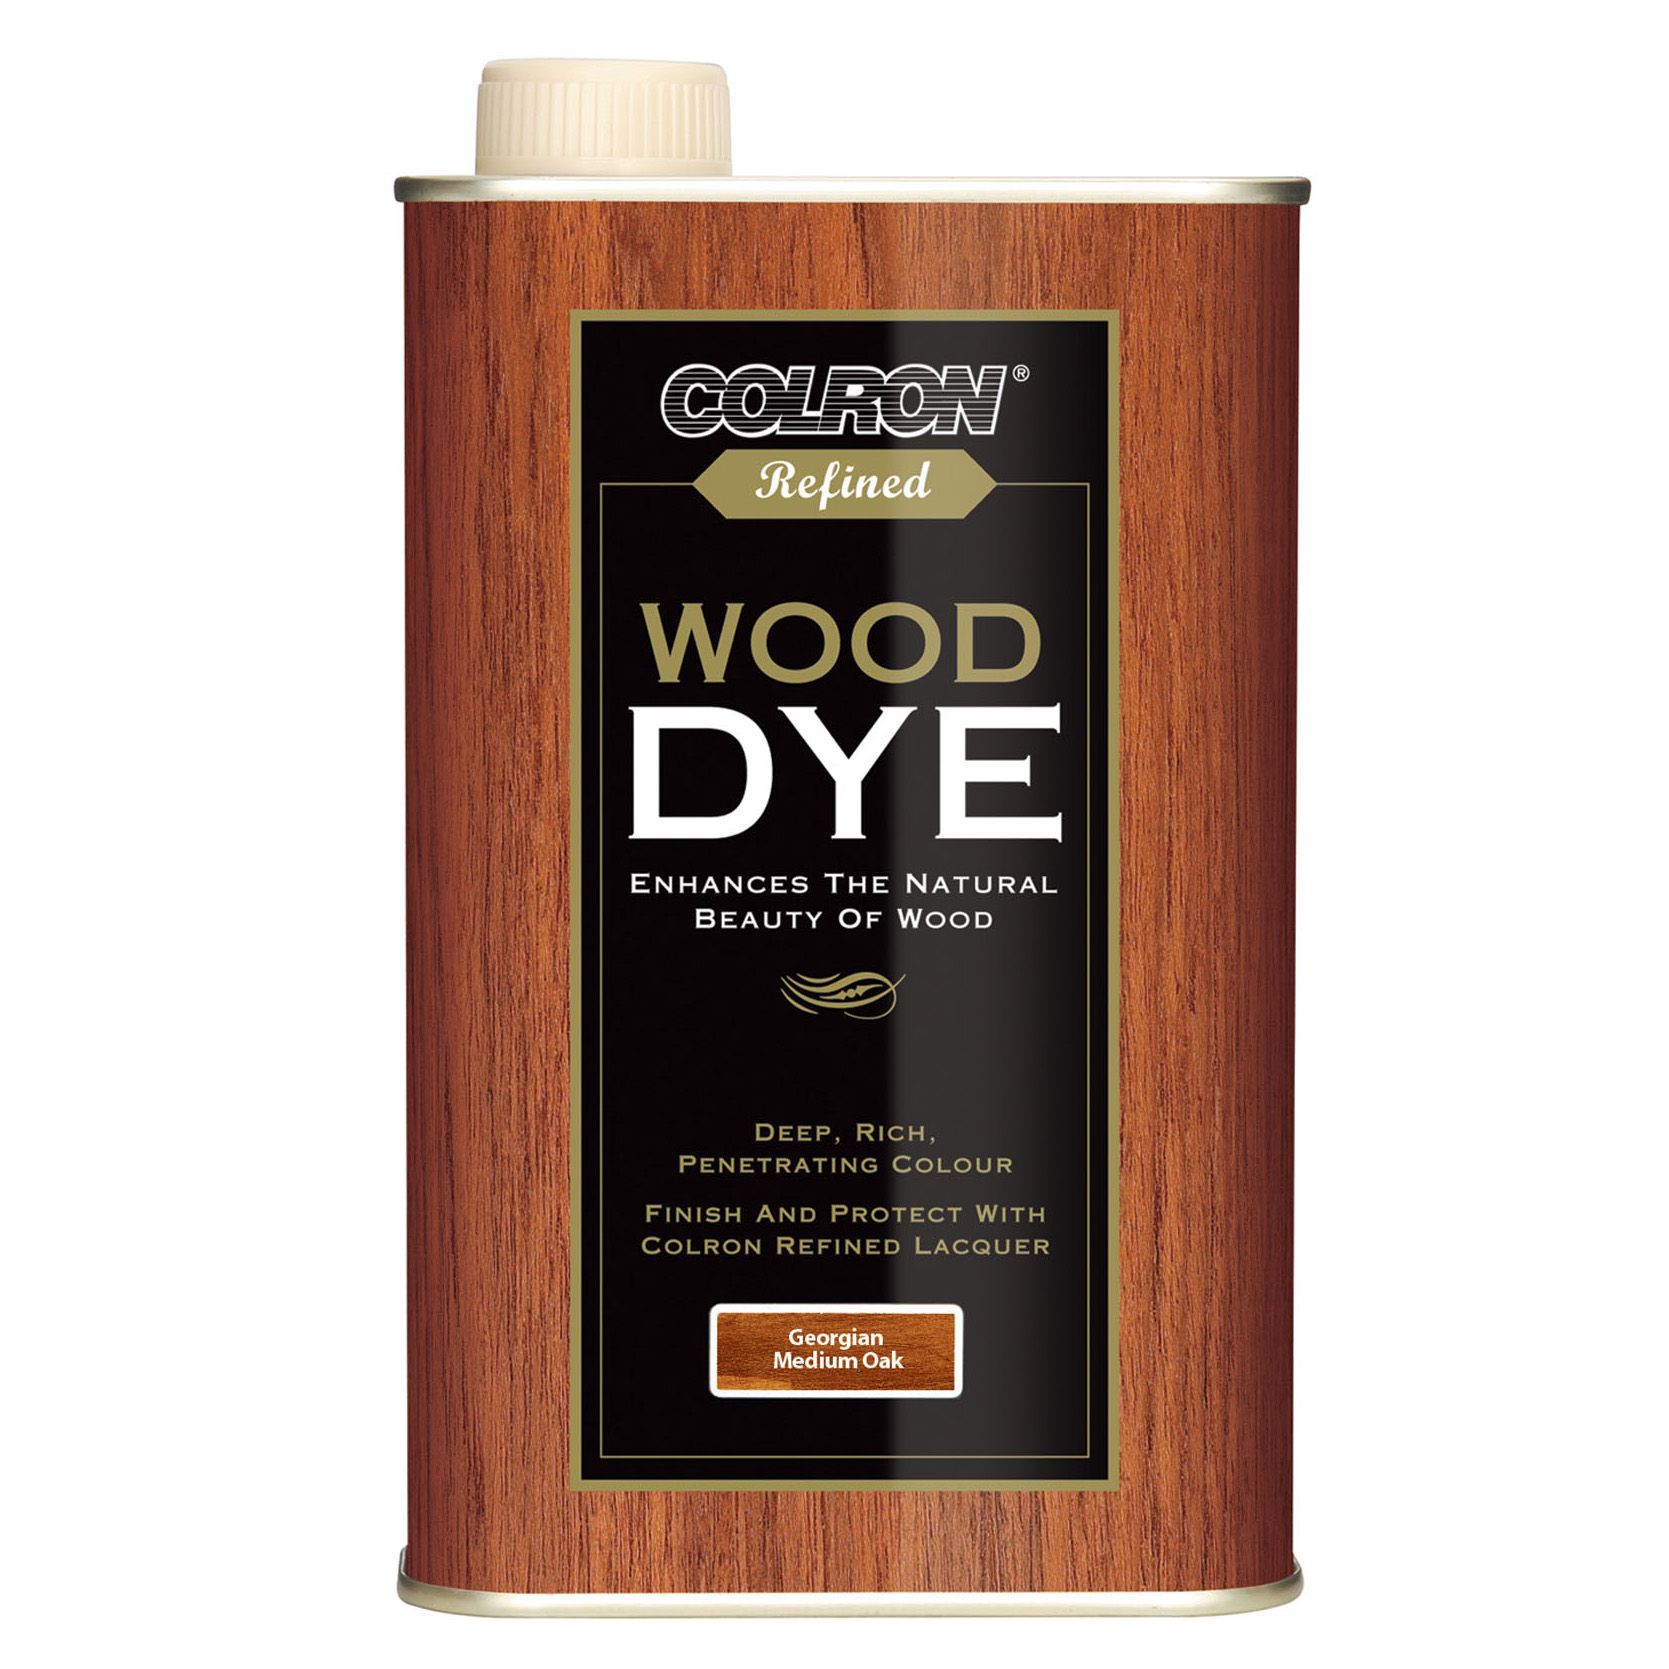 Colron Refined Georgian medium oak Wood dye, 250ml